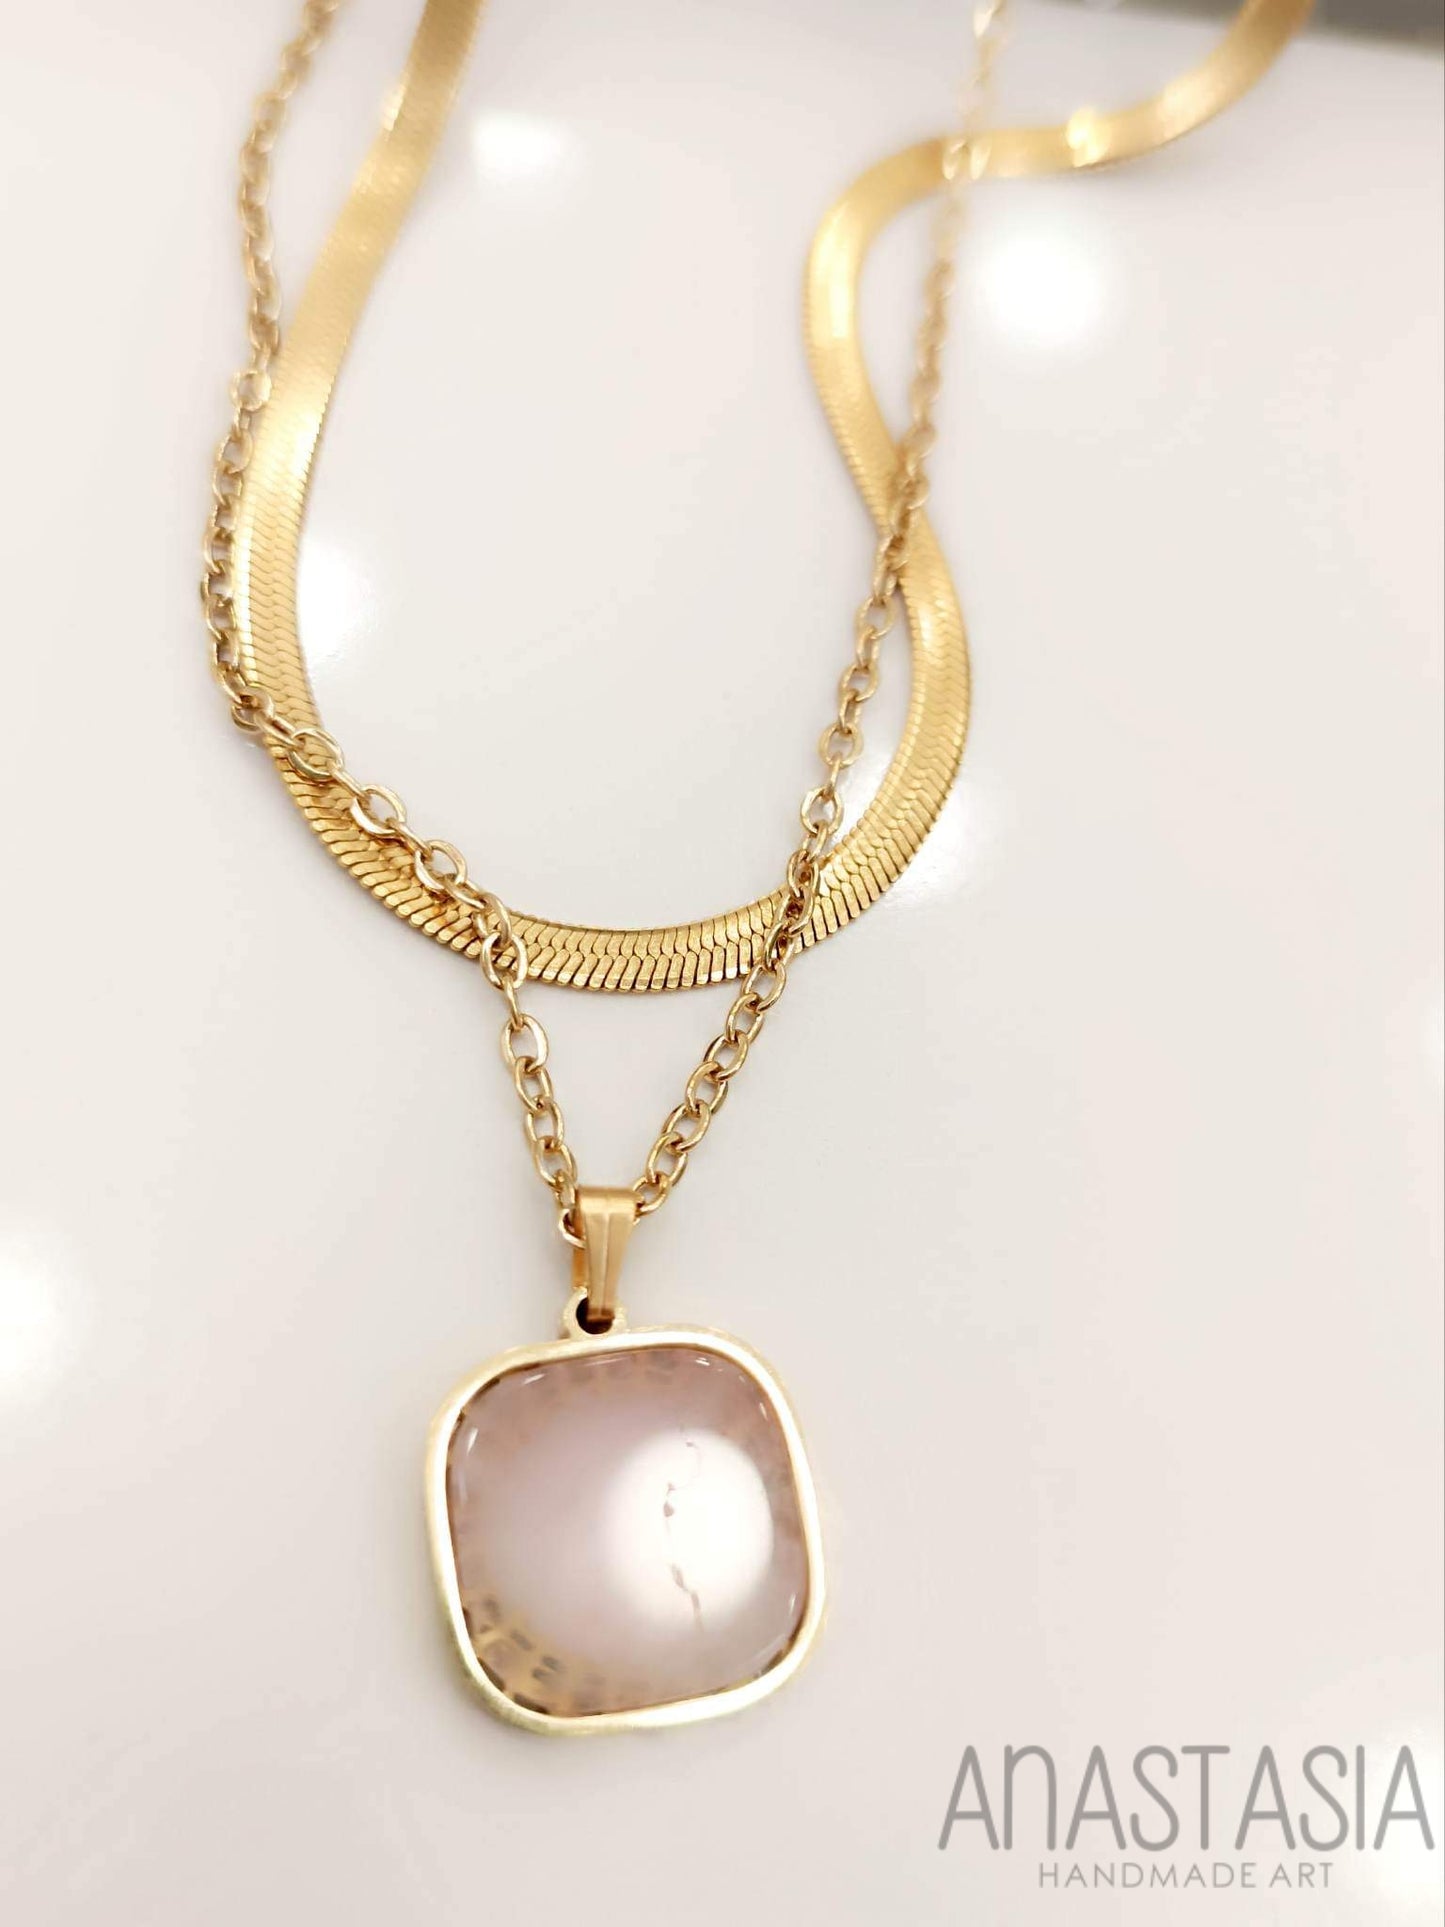 Necklace with rose quartz stone charm